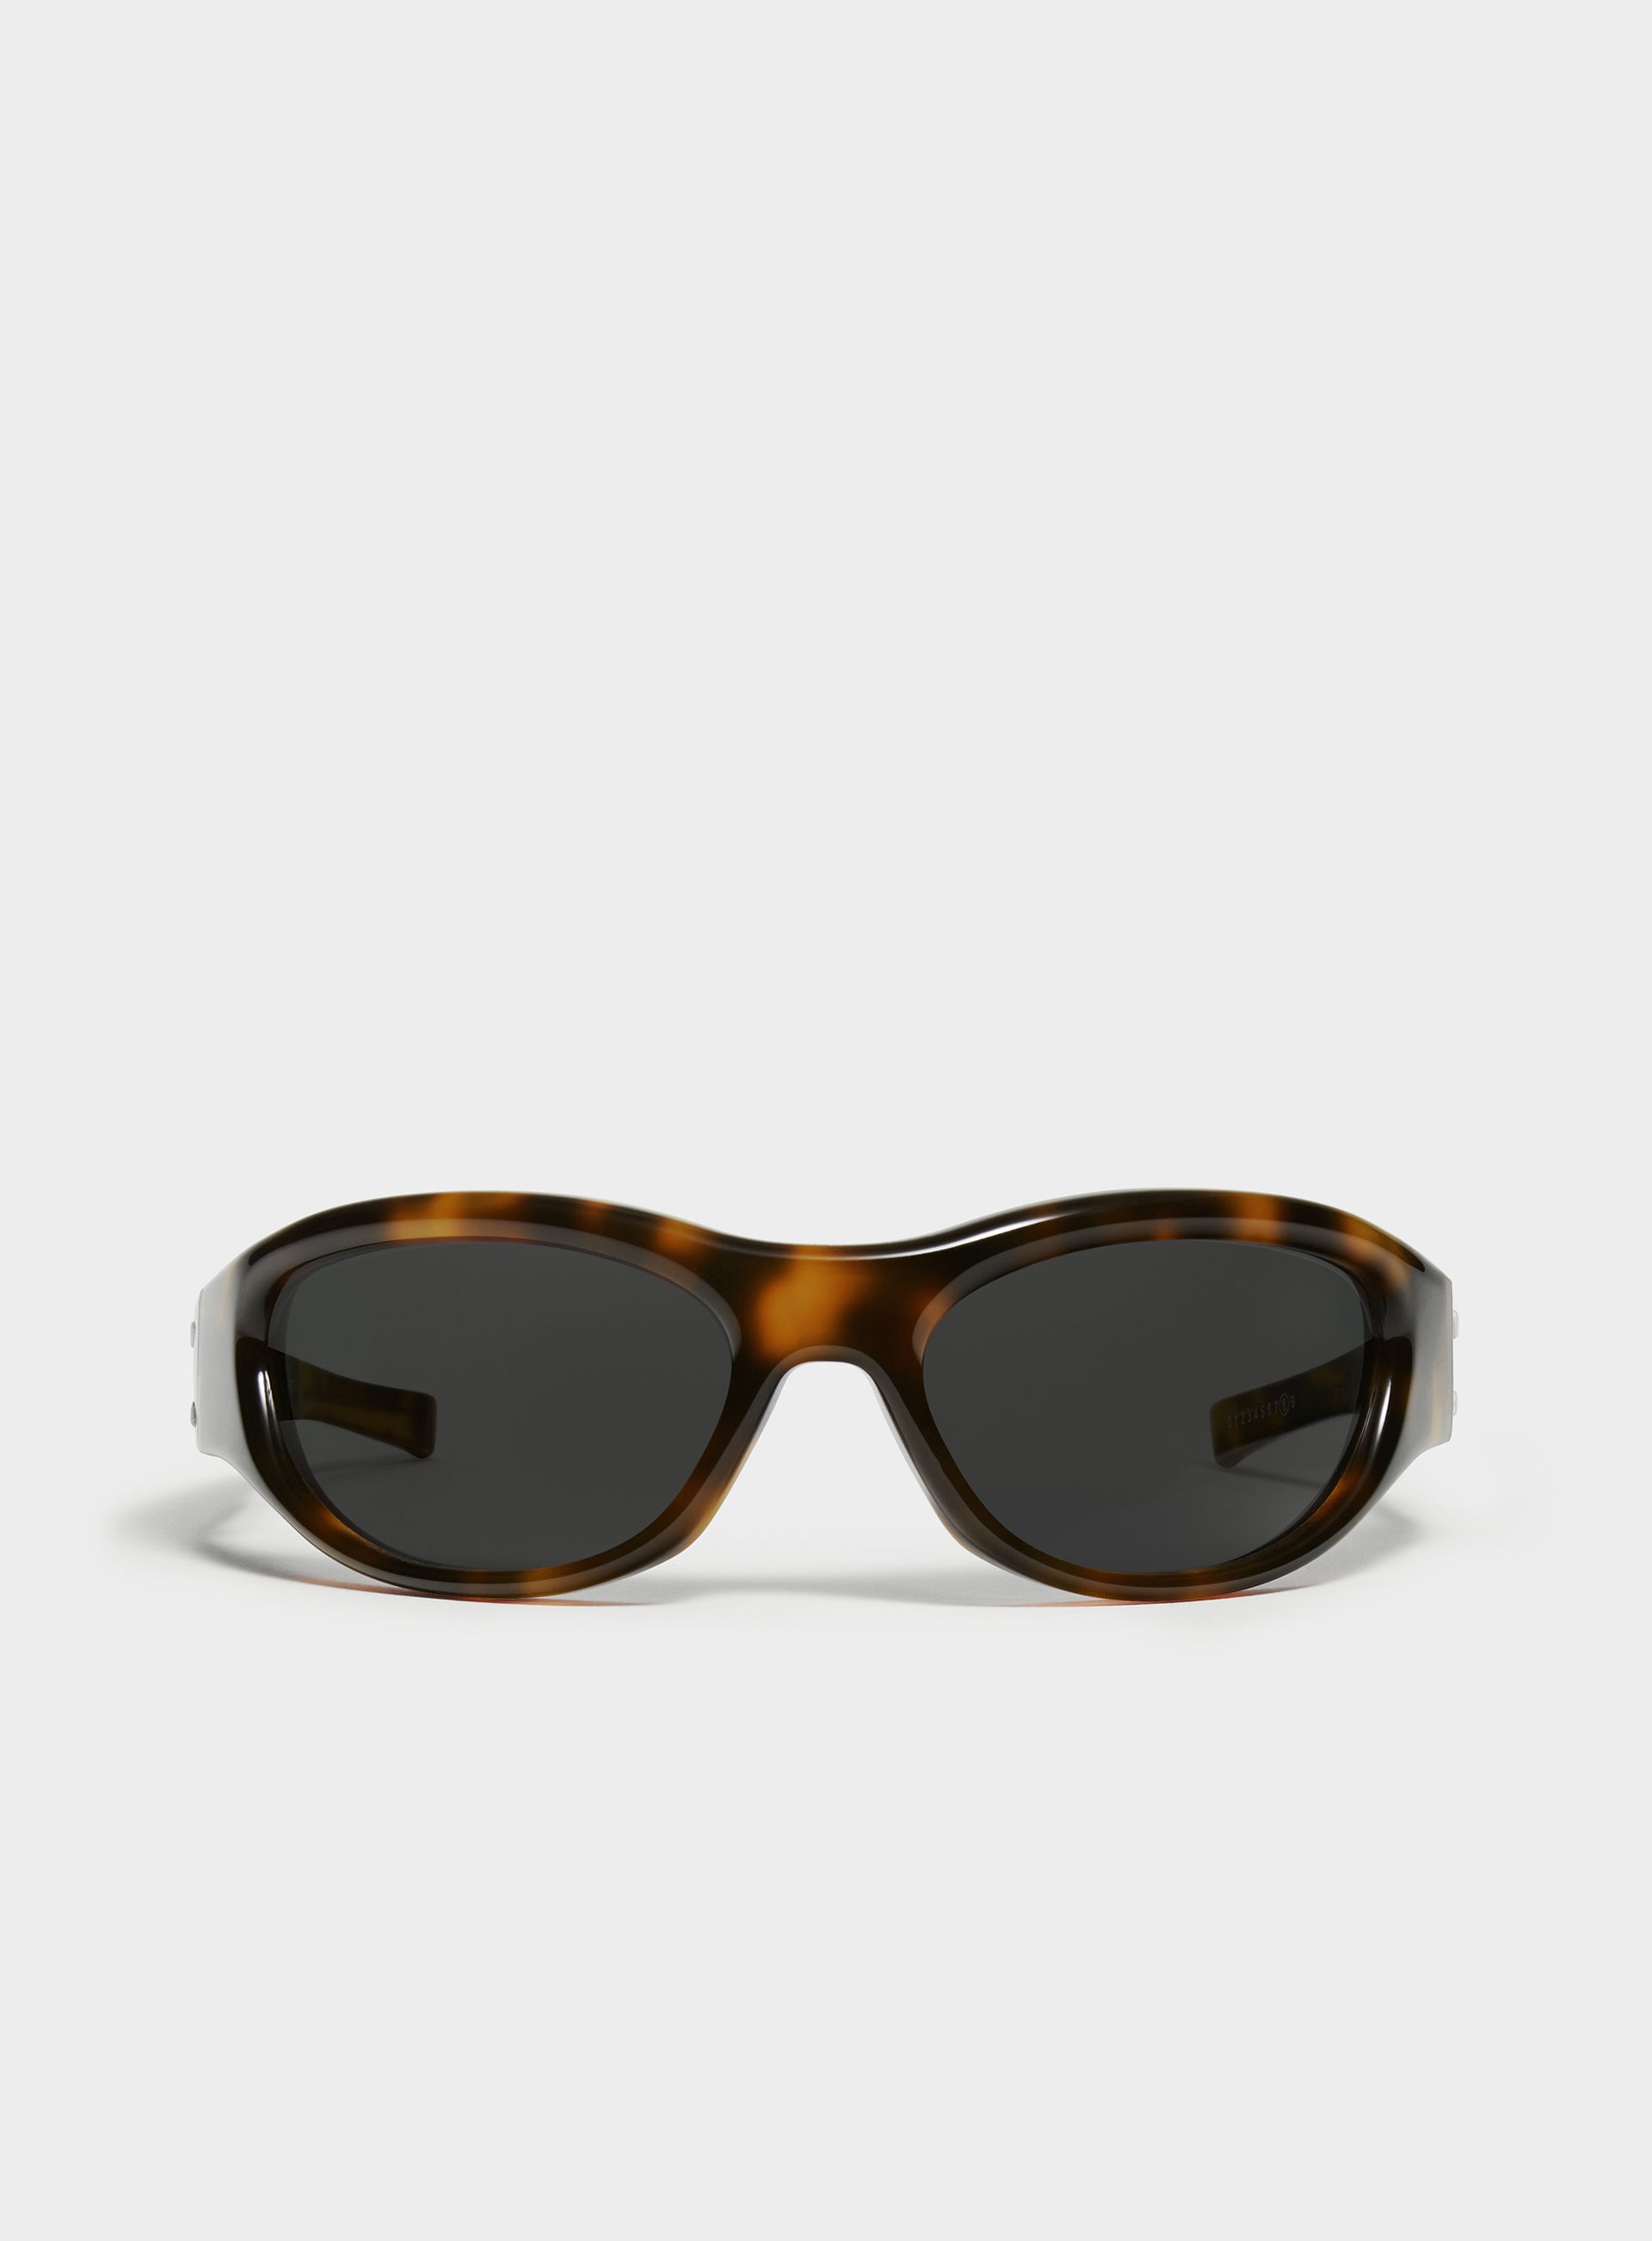 chanel sunglasses 5371